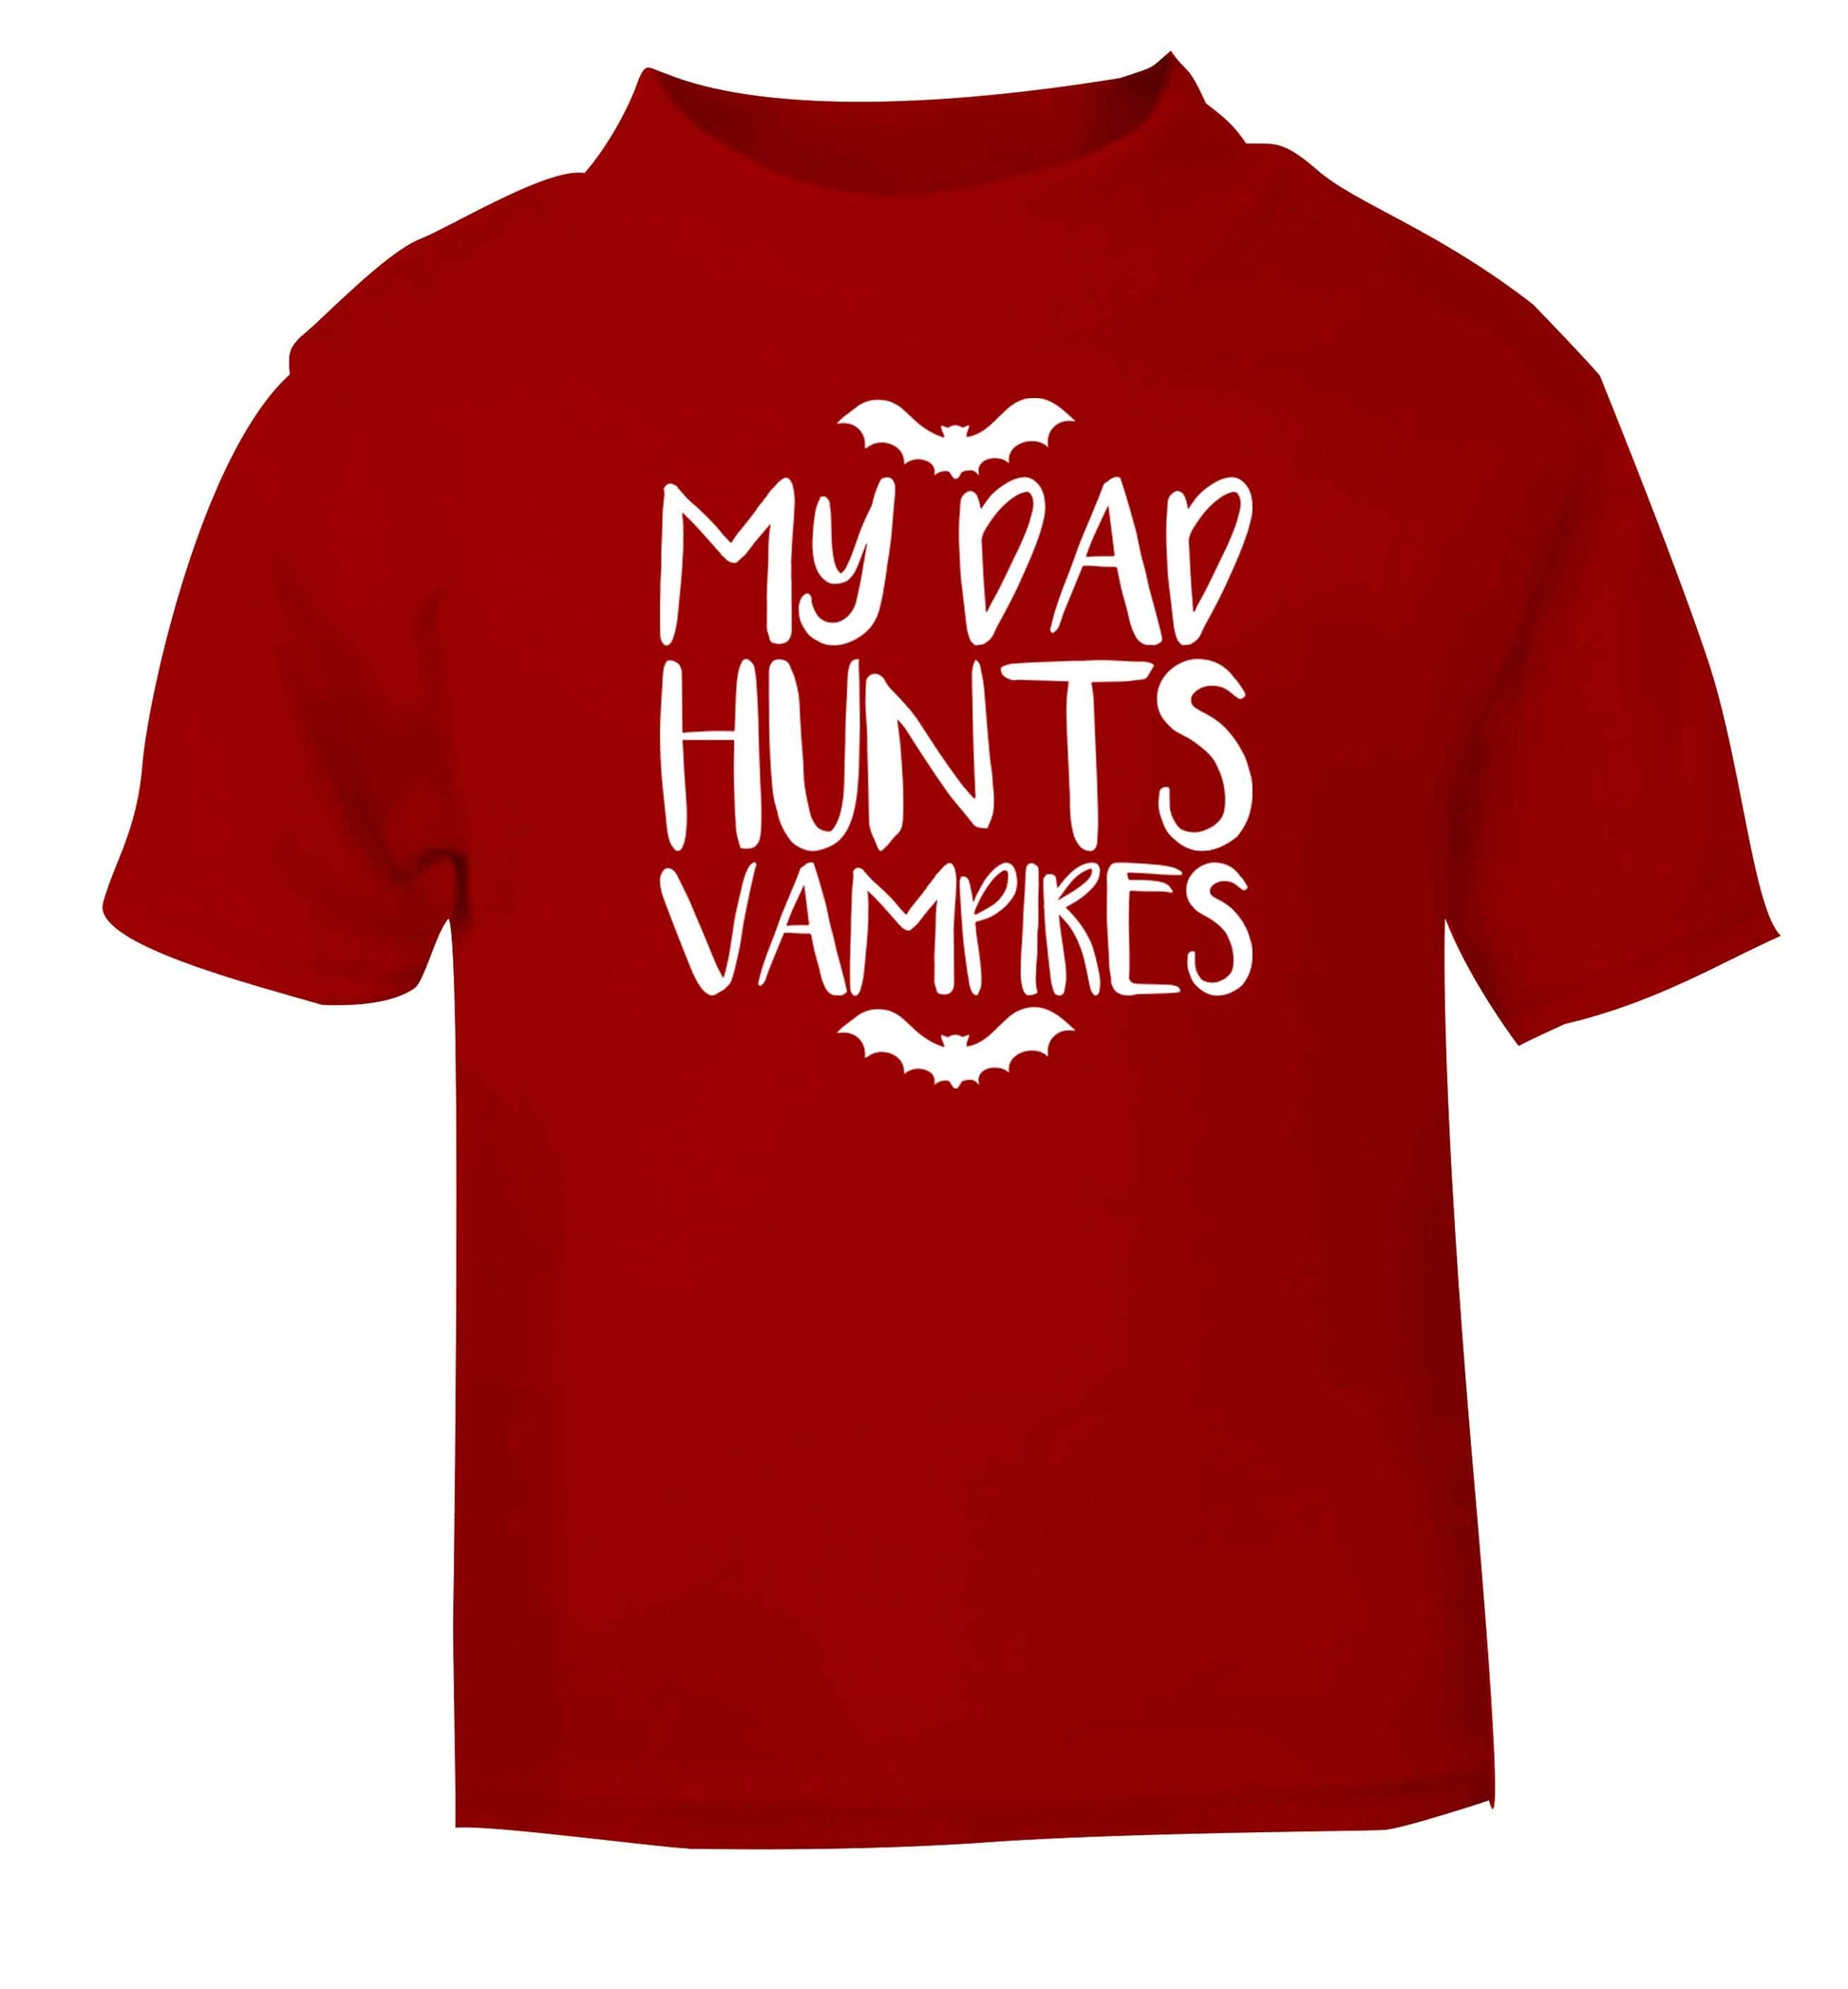 My dad hunts vampires red baby toddler Tshirt 2 Years